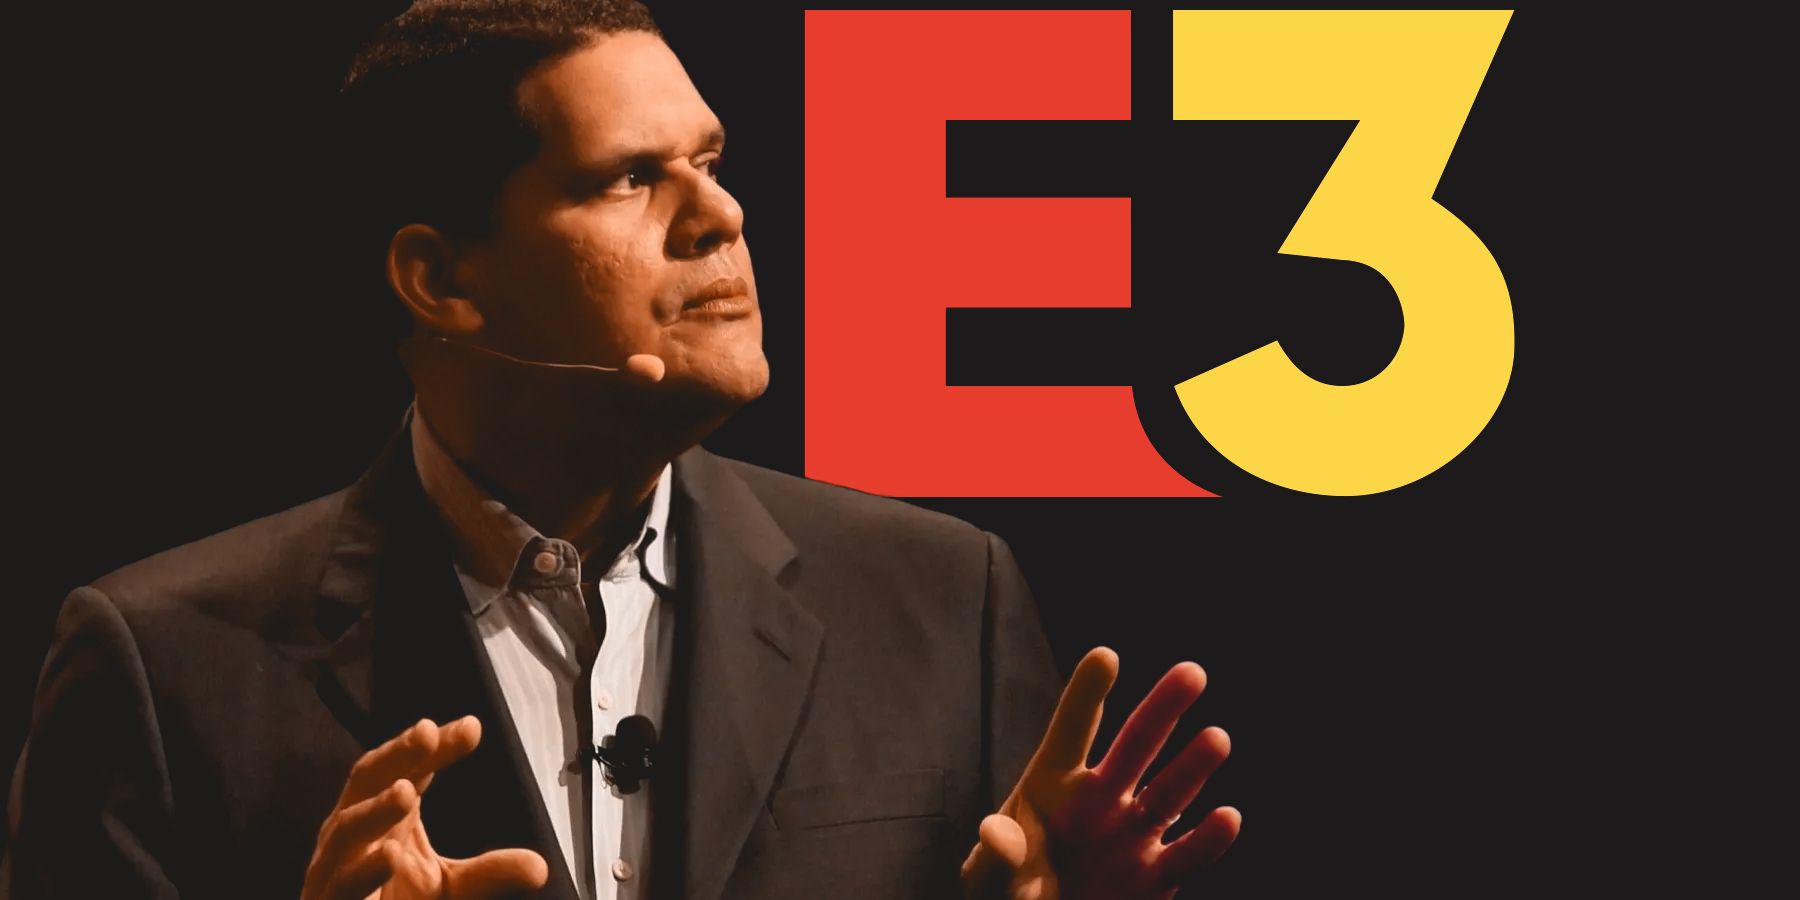 Reggie Fils-Aime in front of E3 logo